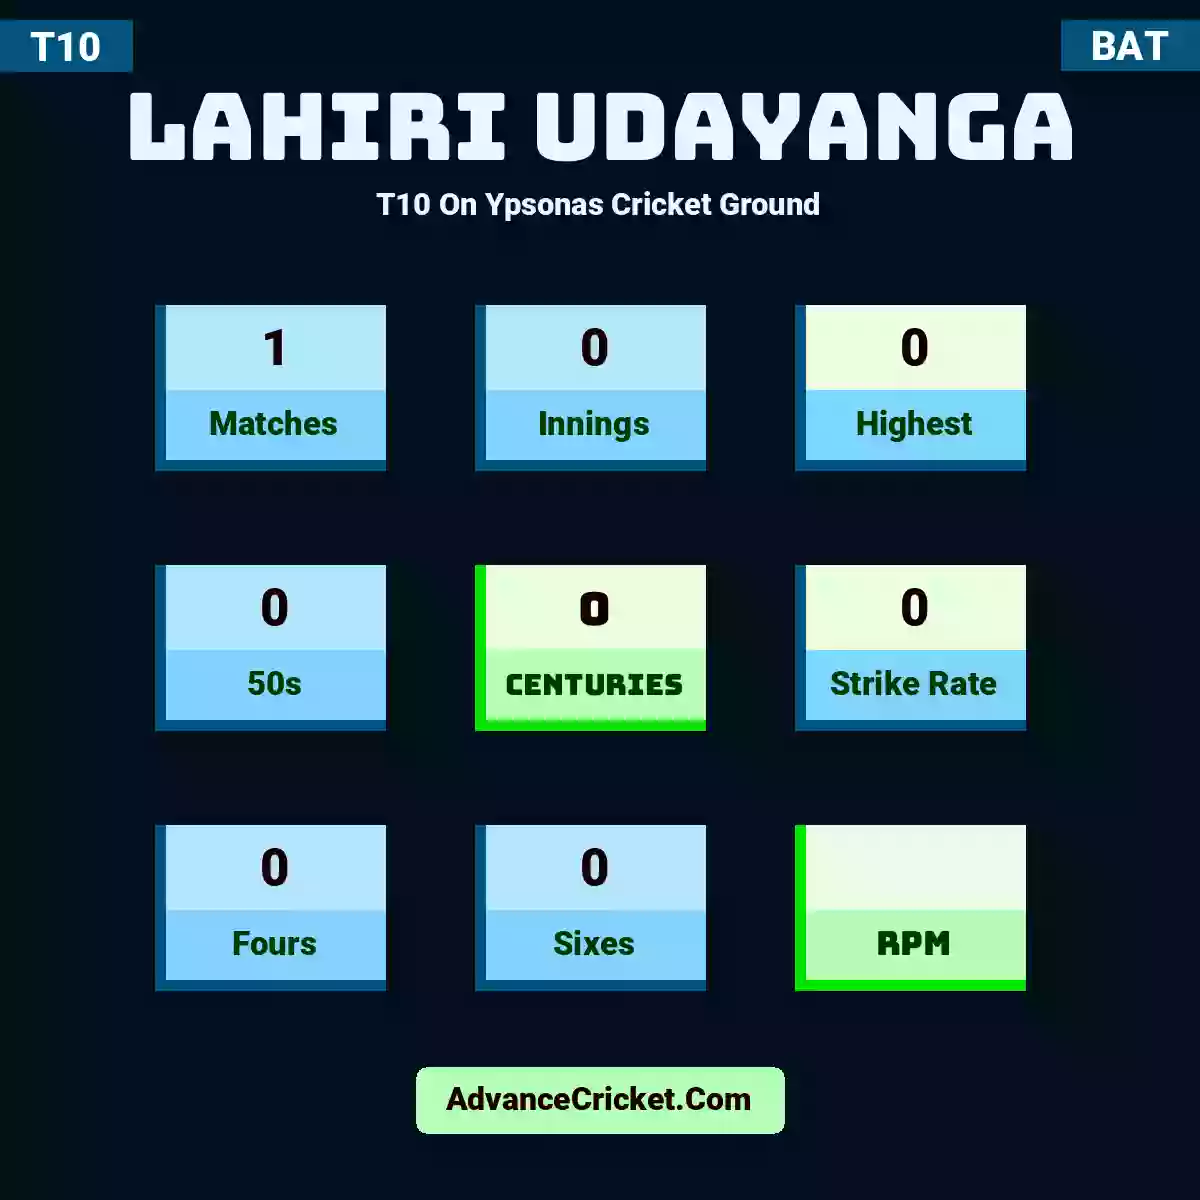 Lahiri Udayanga T10  On Ypsonas Cricket Ground, Lahiri Udayanga played 1 matches, scored 0 runs as highest, 0 half-centuries, and 0 centuries, with a strike rate of 0. L.Udayanga hit 0 fours and 0 sixes.